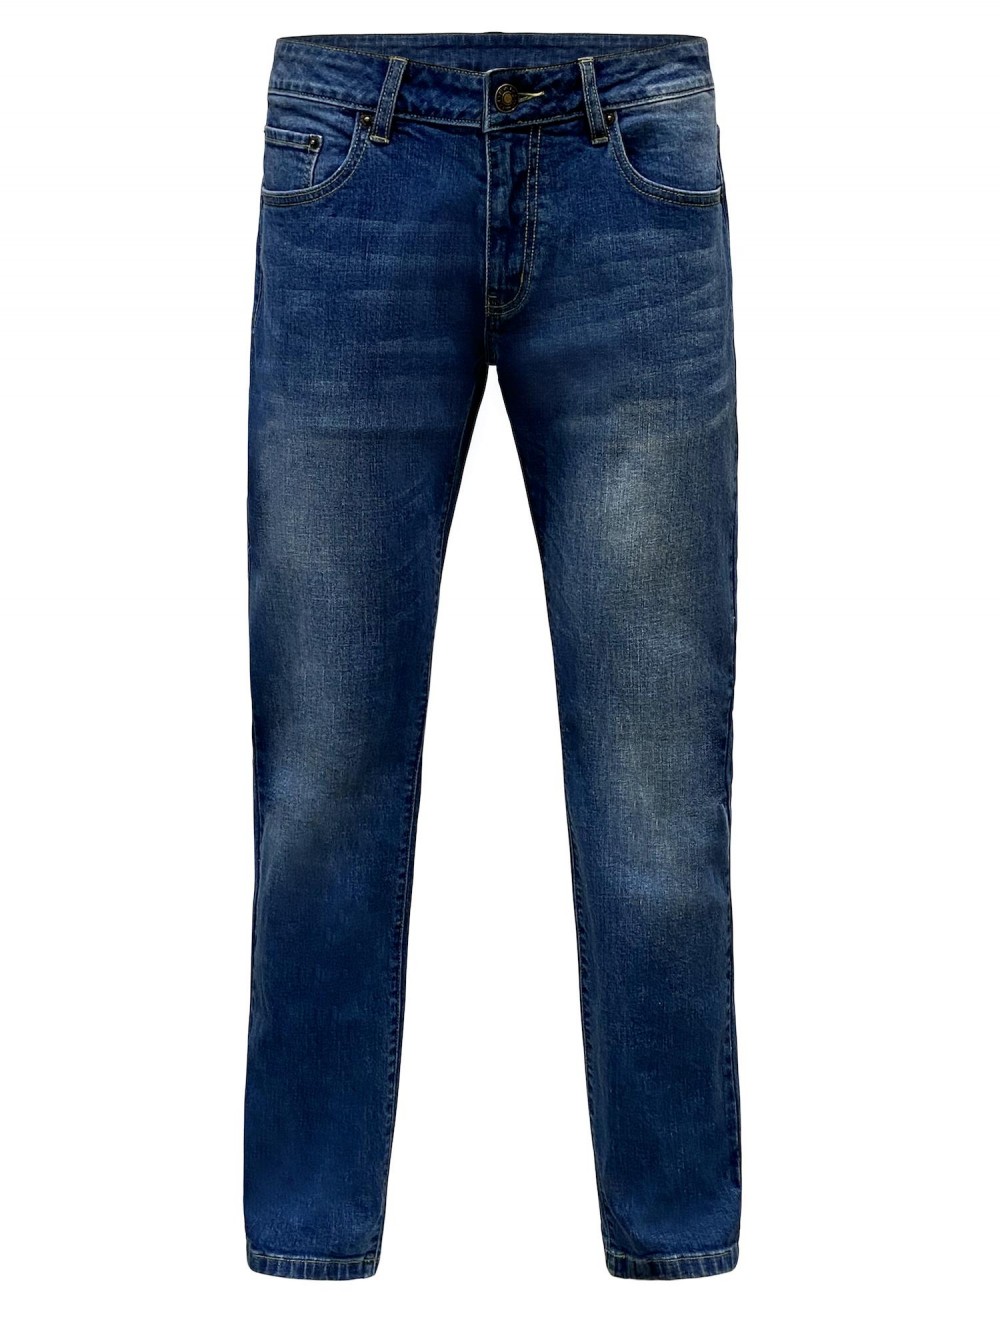 Jeans JSM315 stretch straight fit - med.blue